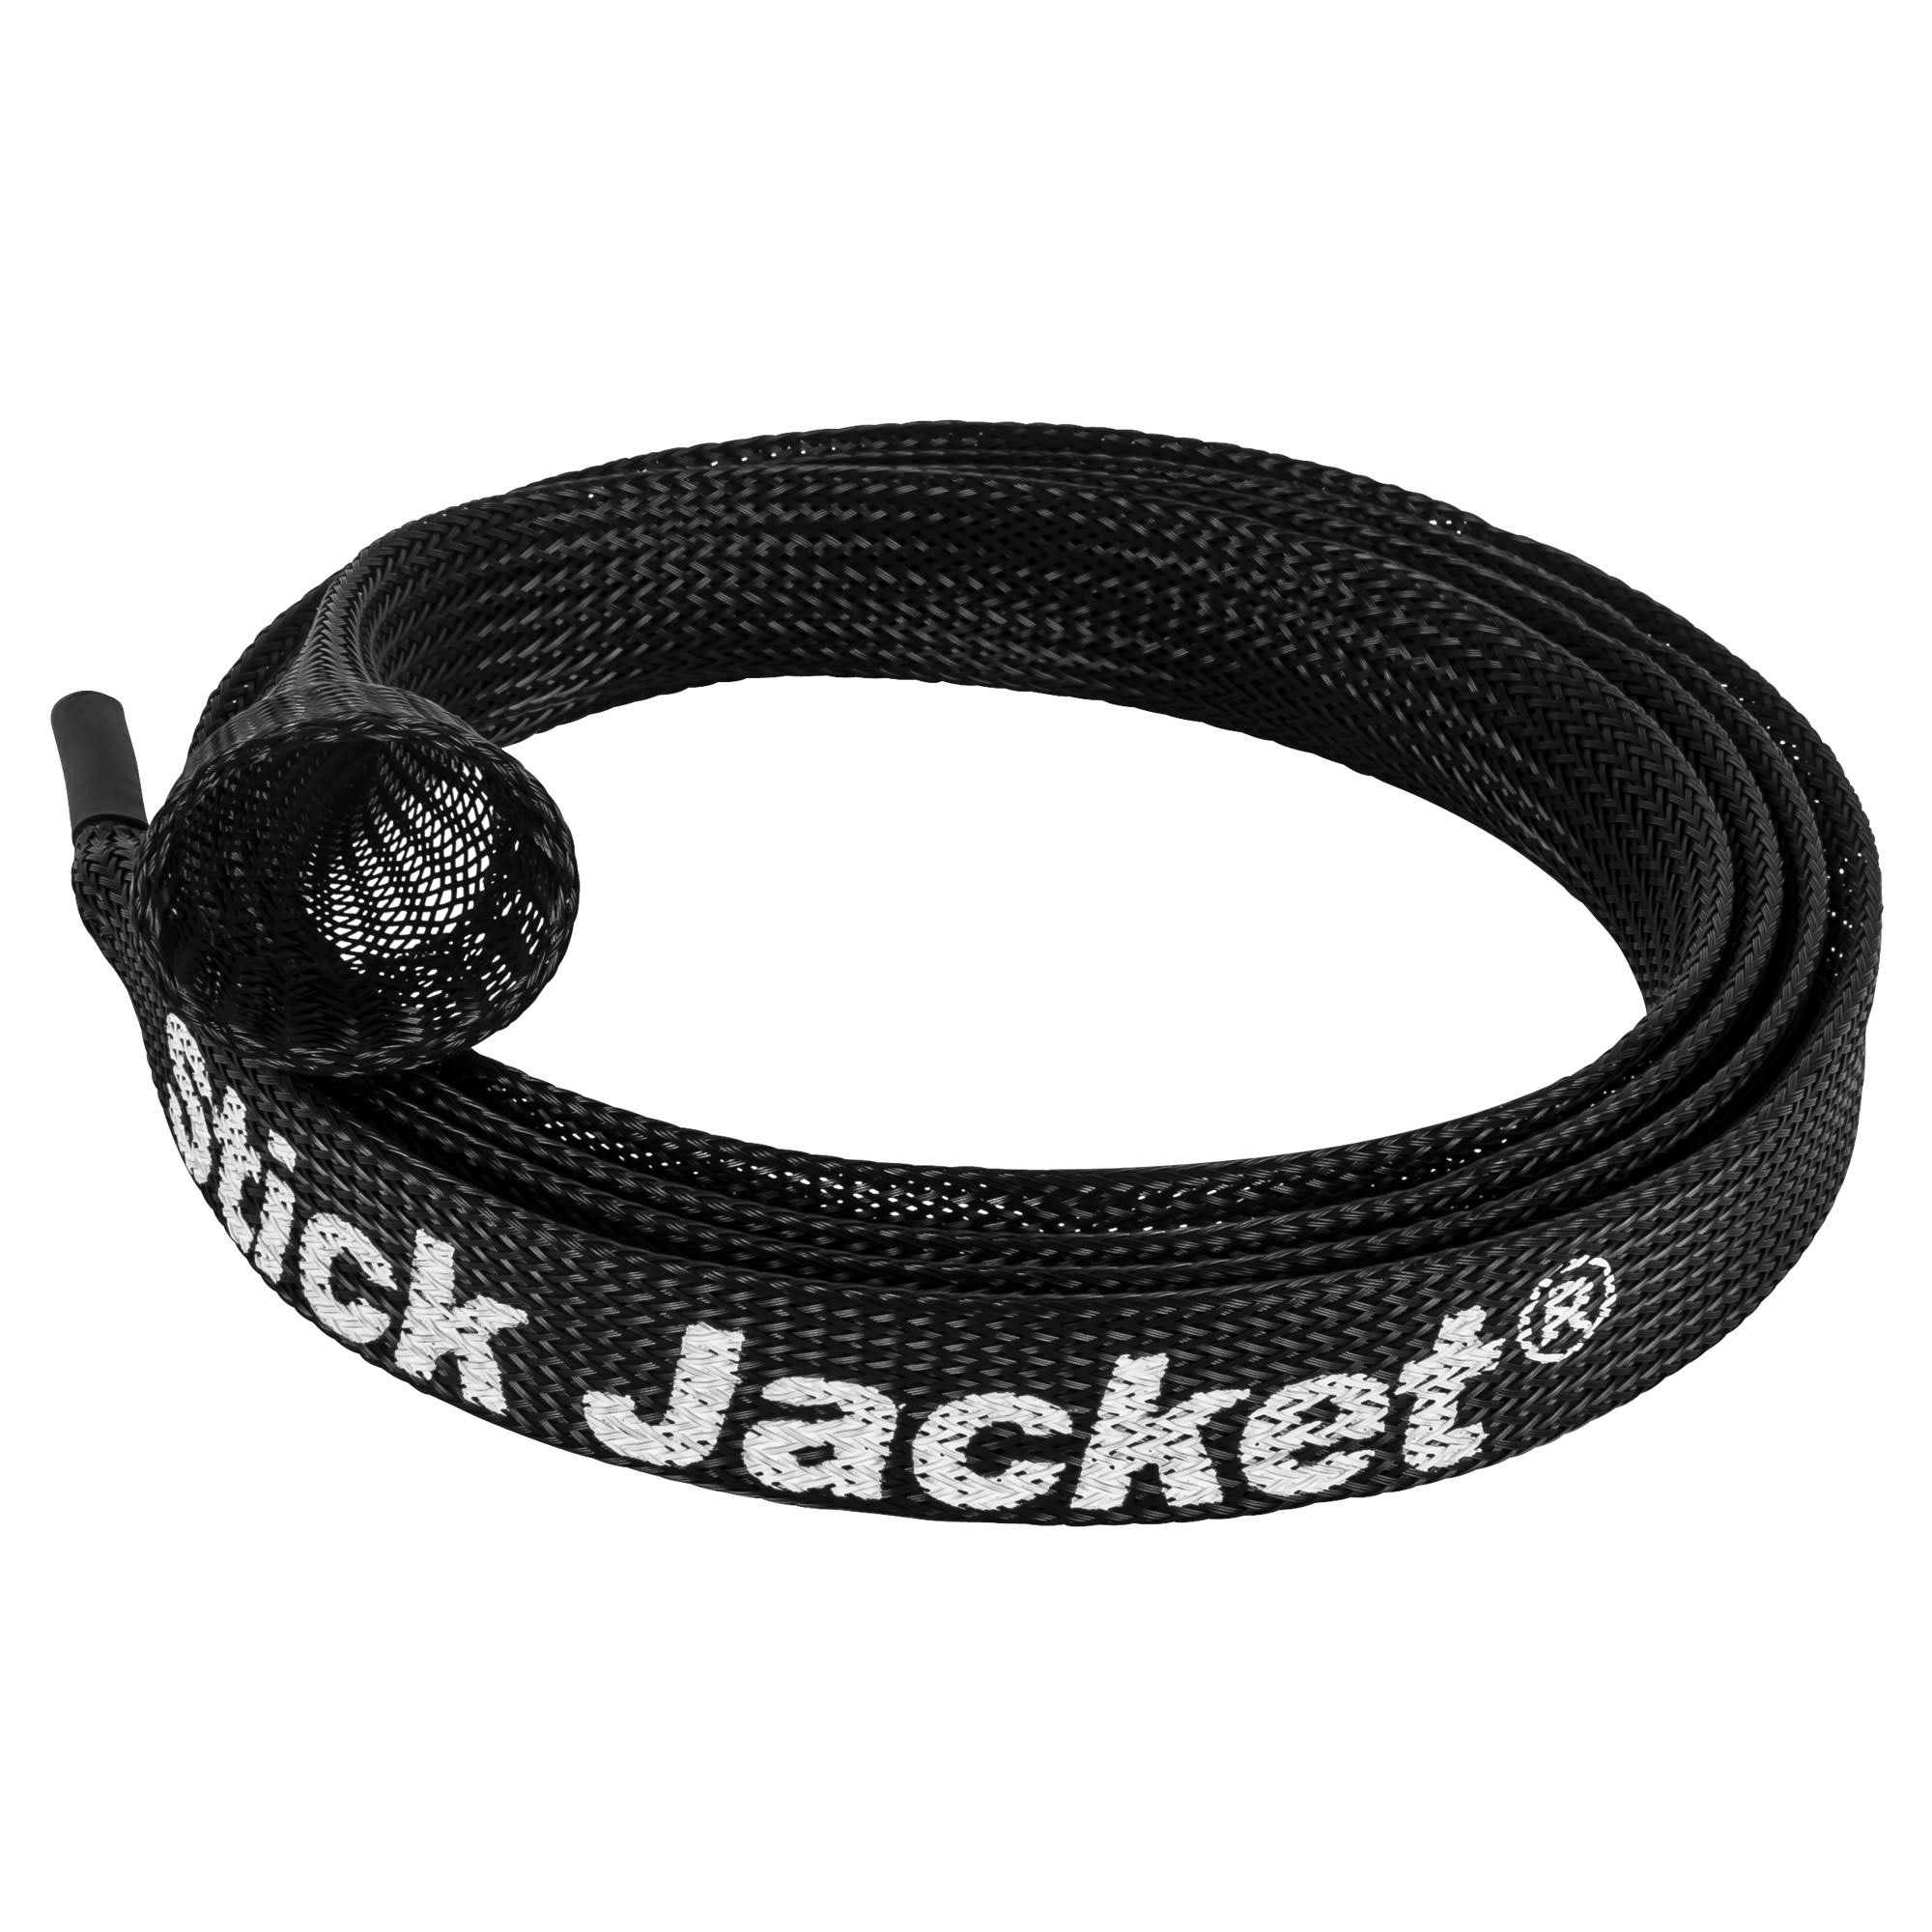 Stick Jacket Fishing Rod Cover - Black, Big Game 7